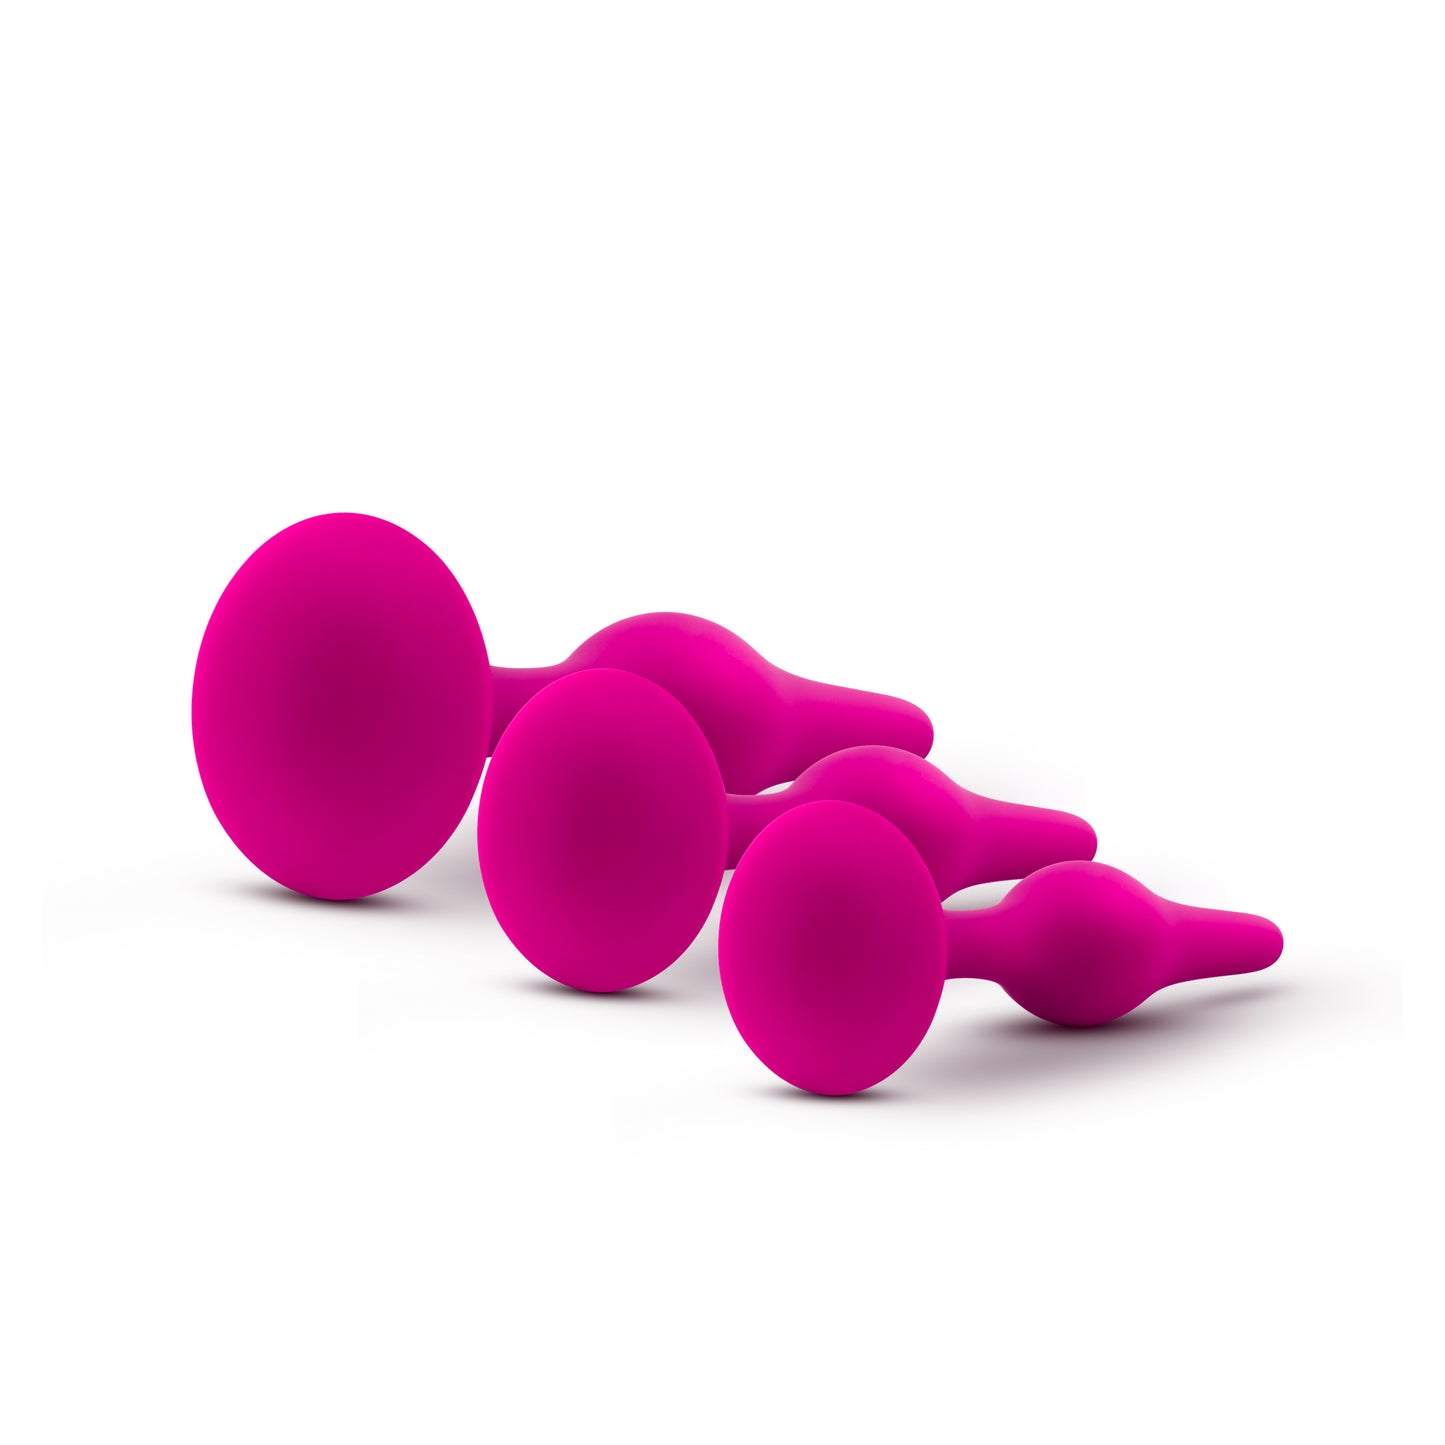 Luxe - Beginner Plug Kit - Pink BL-312610